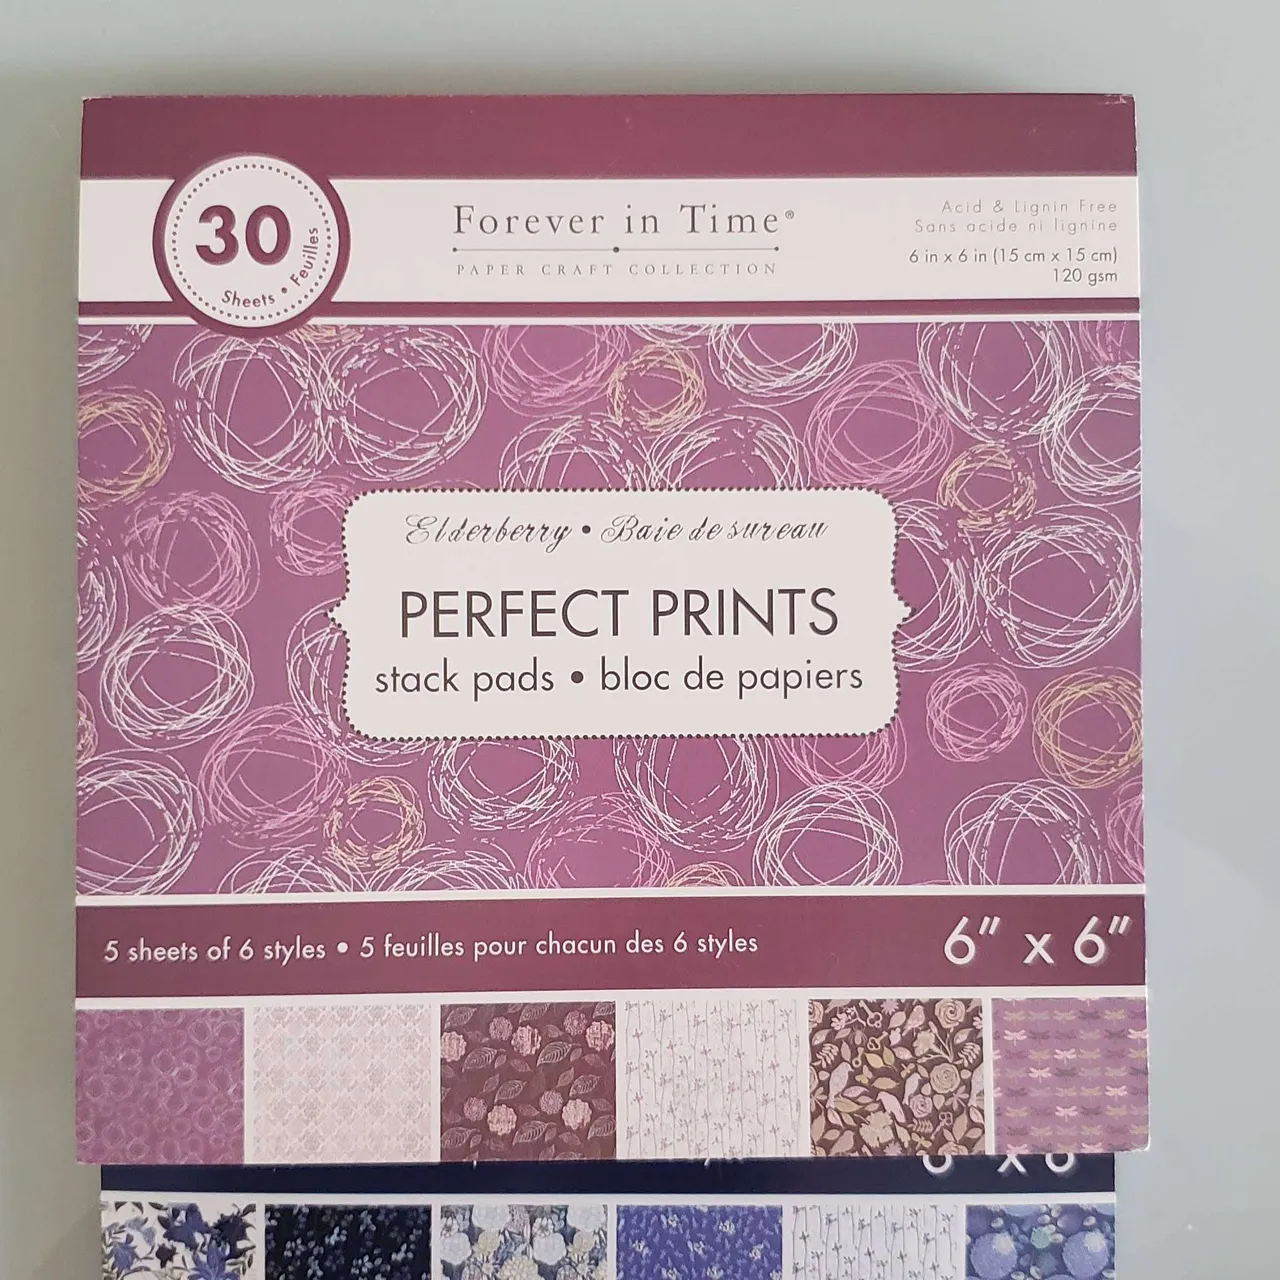 Perfect Prints (Crafting sheets) photo 3